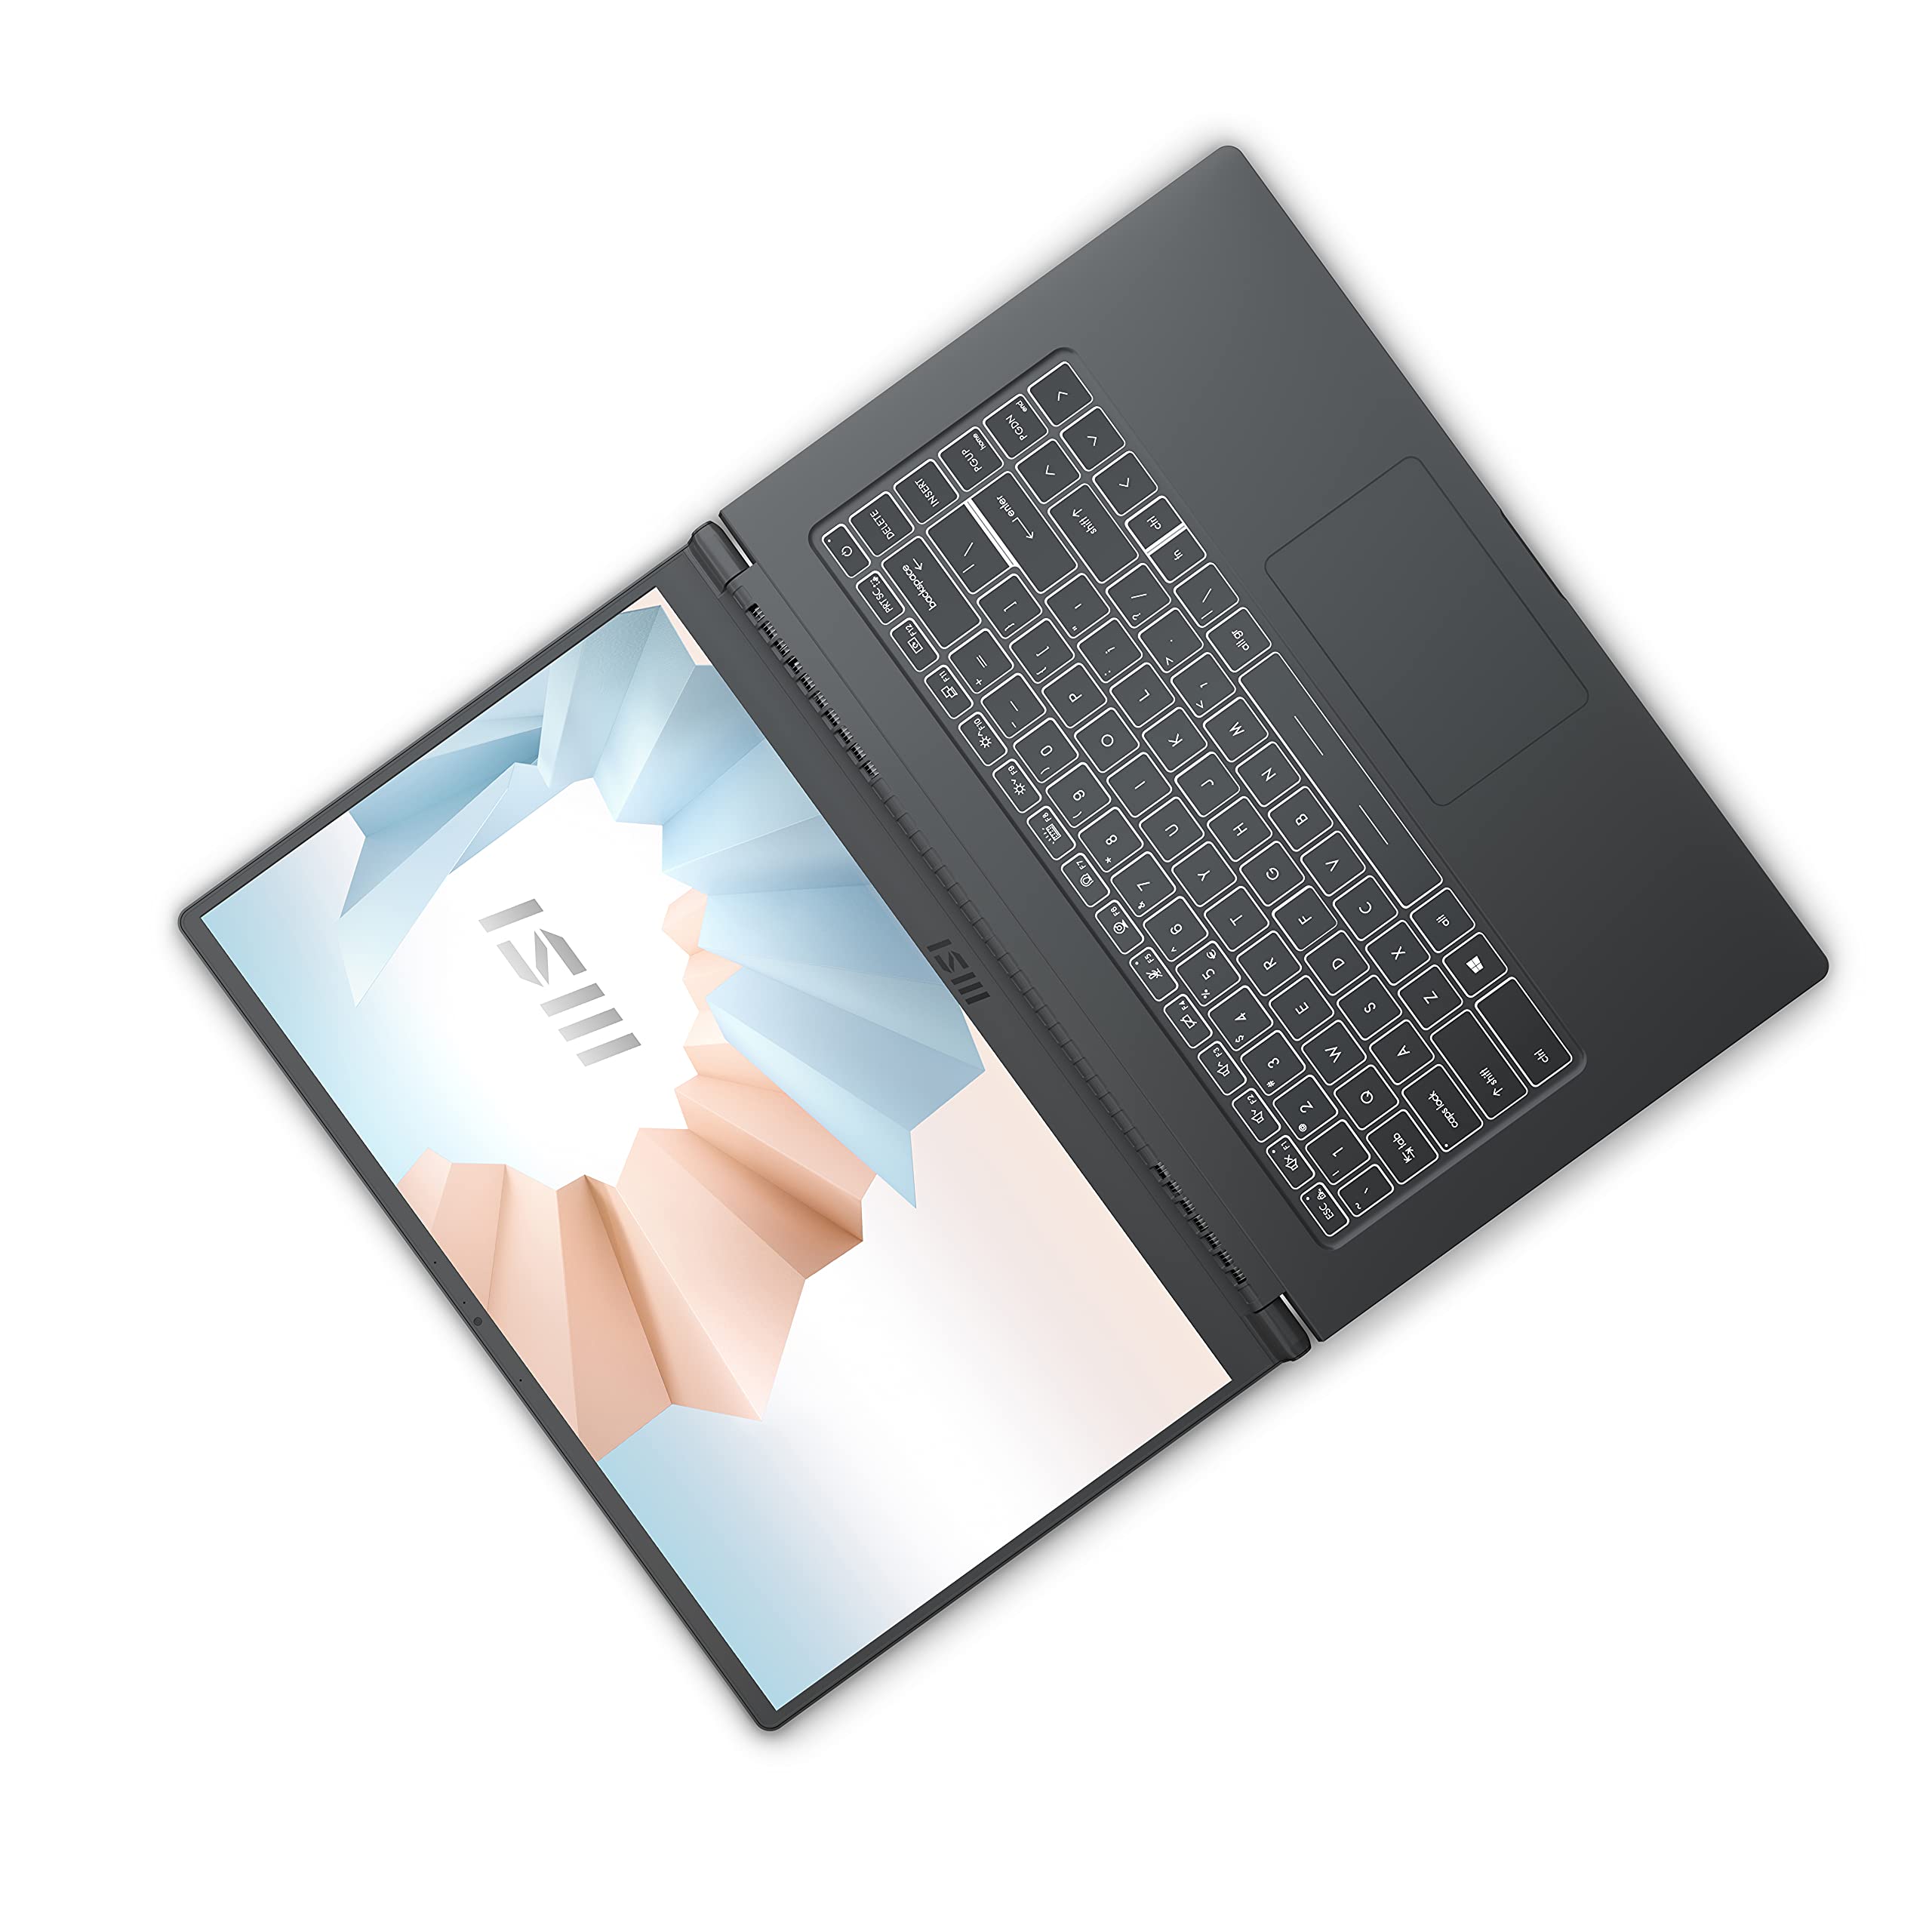 MSI Modern 15 Thin and Light Daily Laptop: 15.6" FHD 1080p, Intel Core i7-1195G7, Intel Iris Xe, 16GB, 512GB SSD, Win10, Carbon Gray (A11MU-681)